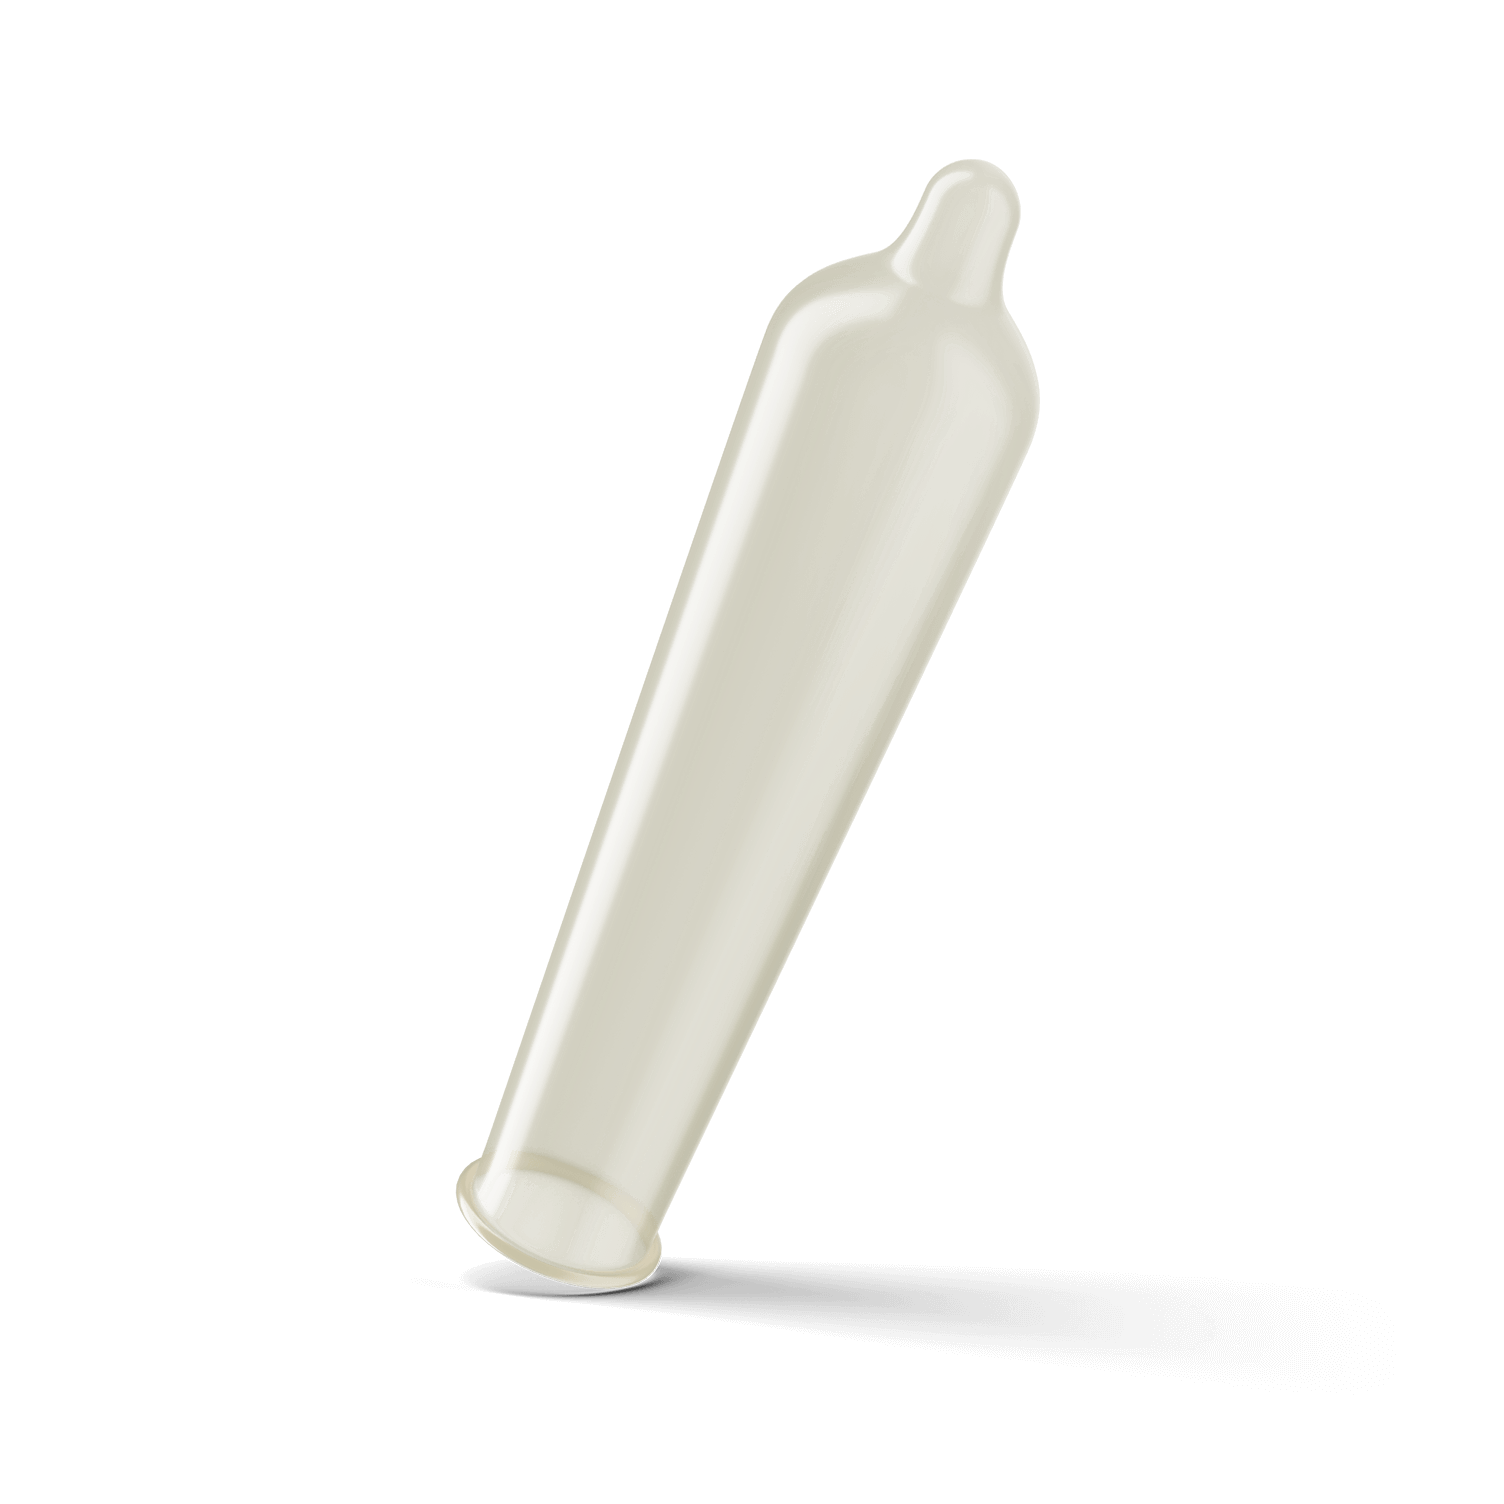 Magnum large condom with reservoir tip.